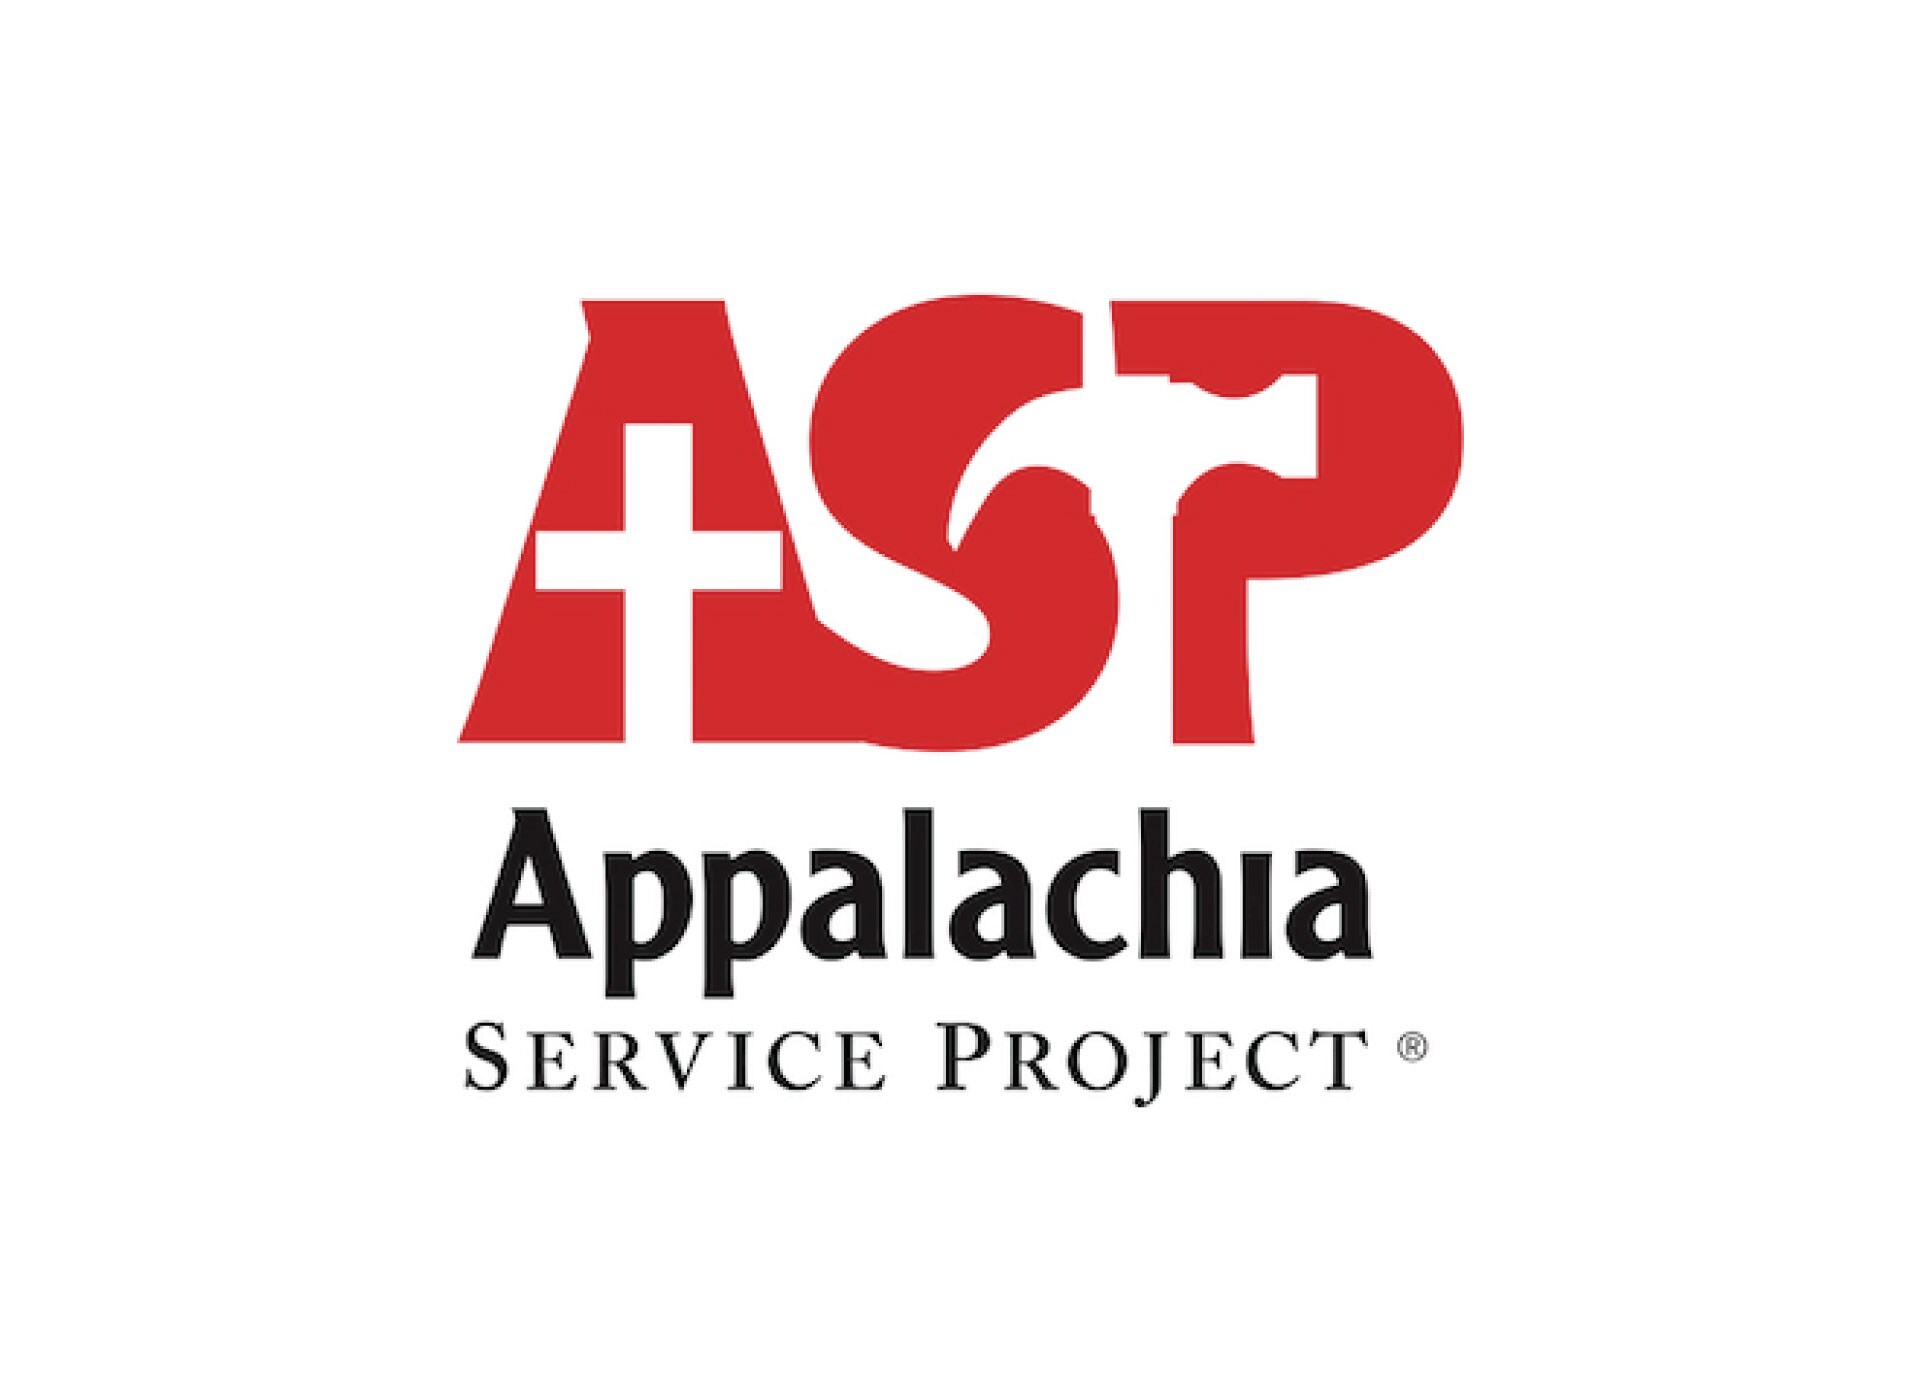 Appalachia Service Project logo